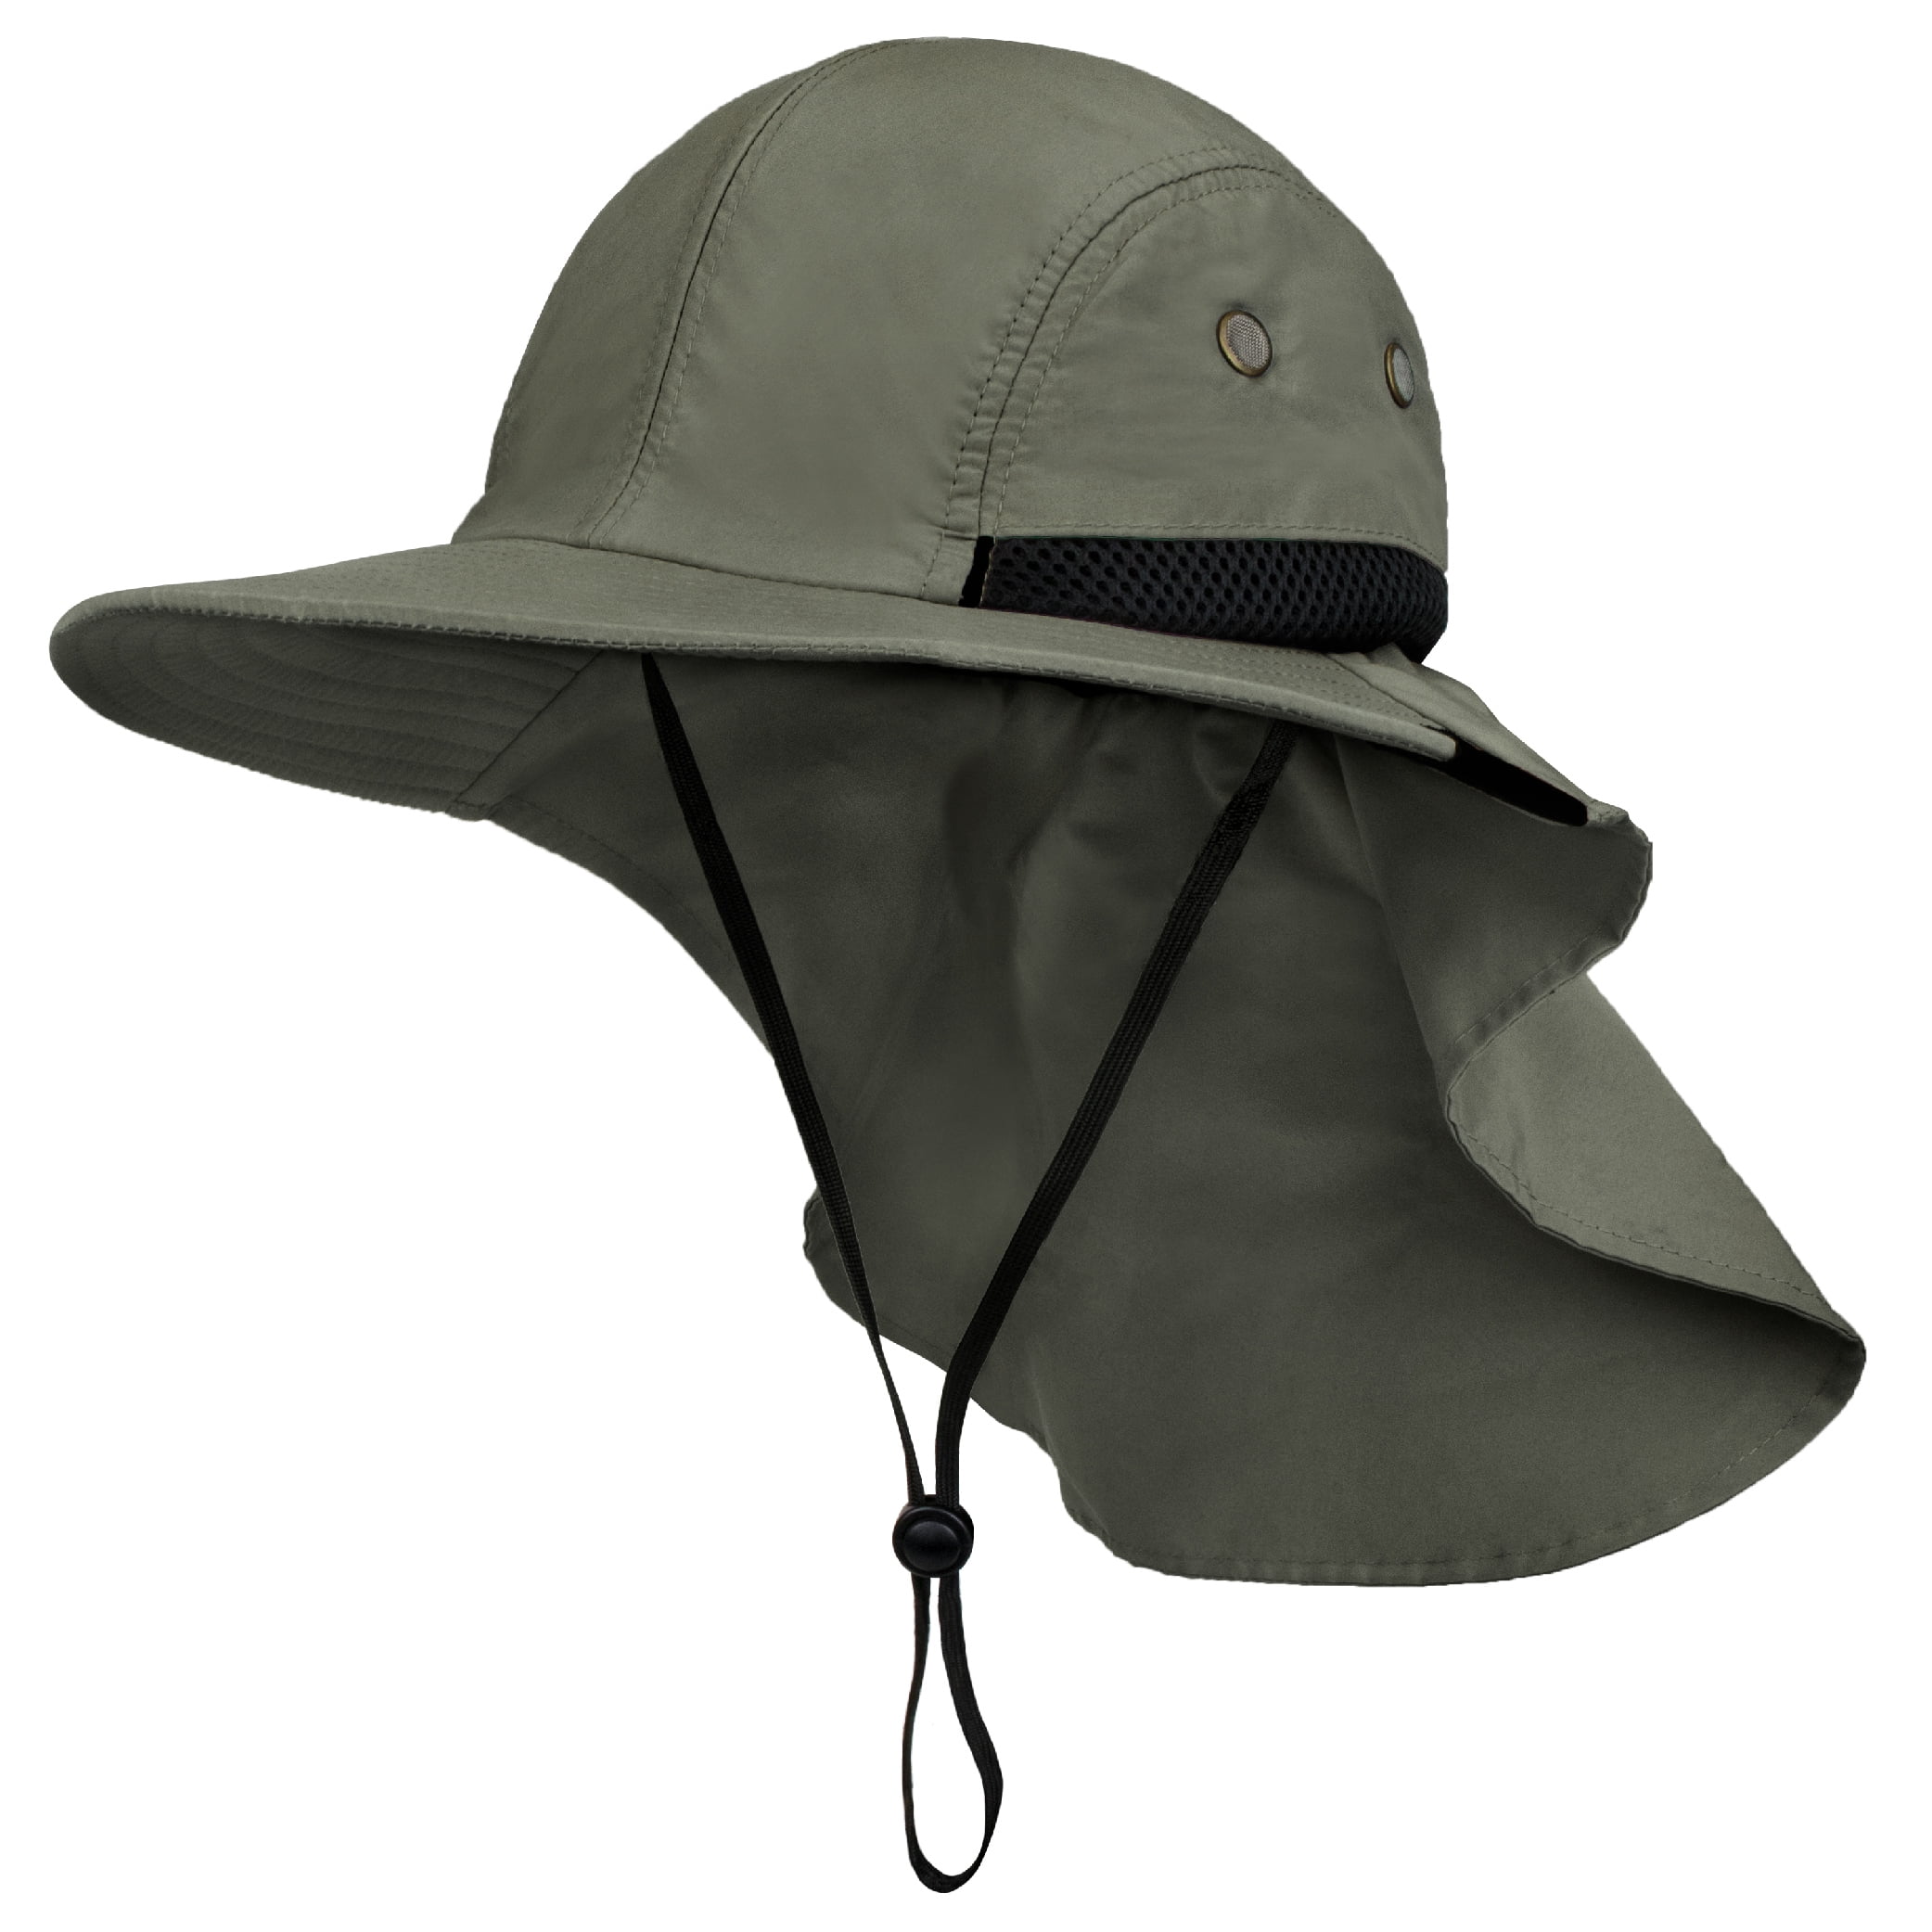 SUN CUBE Sun Hat for Men, Wide Brim Fishing Hat Neck Flap Cover Men Women,  Hiking Safari, UV Sun Protection Summer Gardening Beach Camping UPF 50+,  Camo Gray 